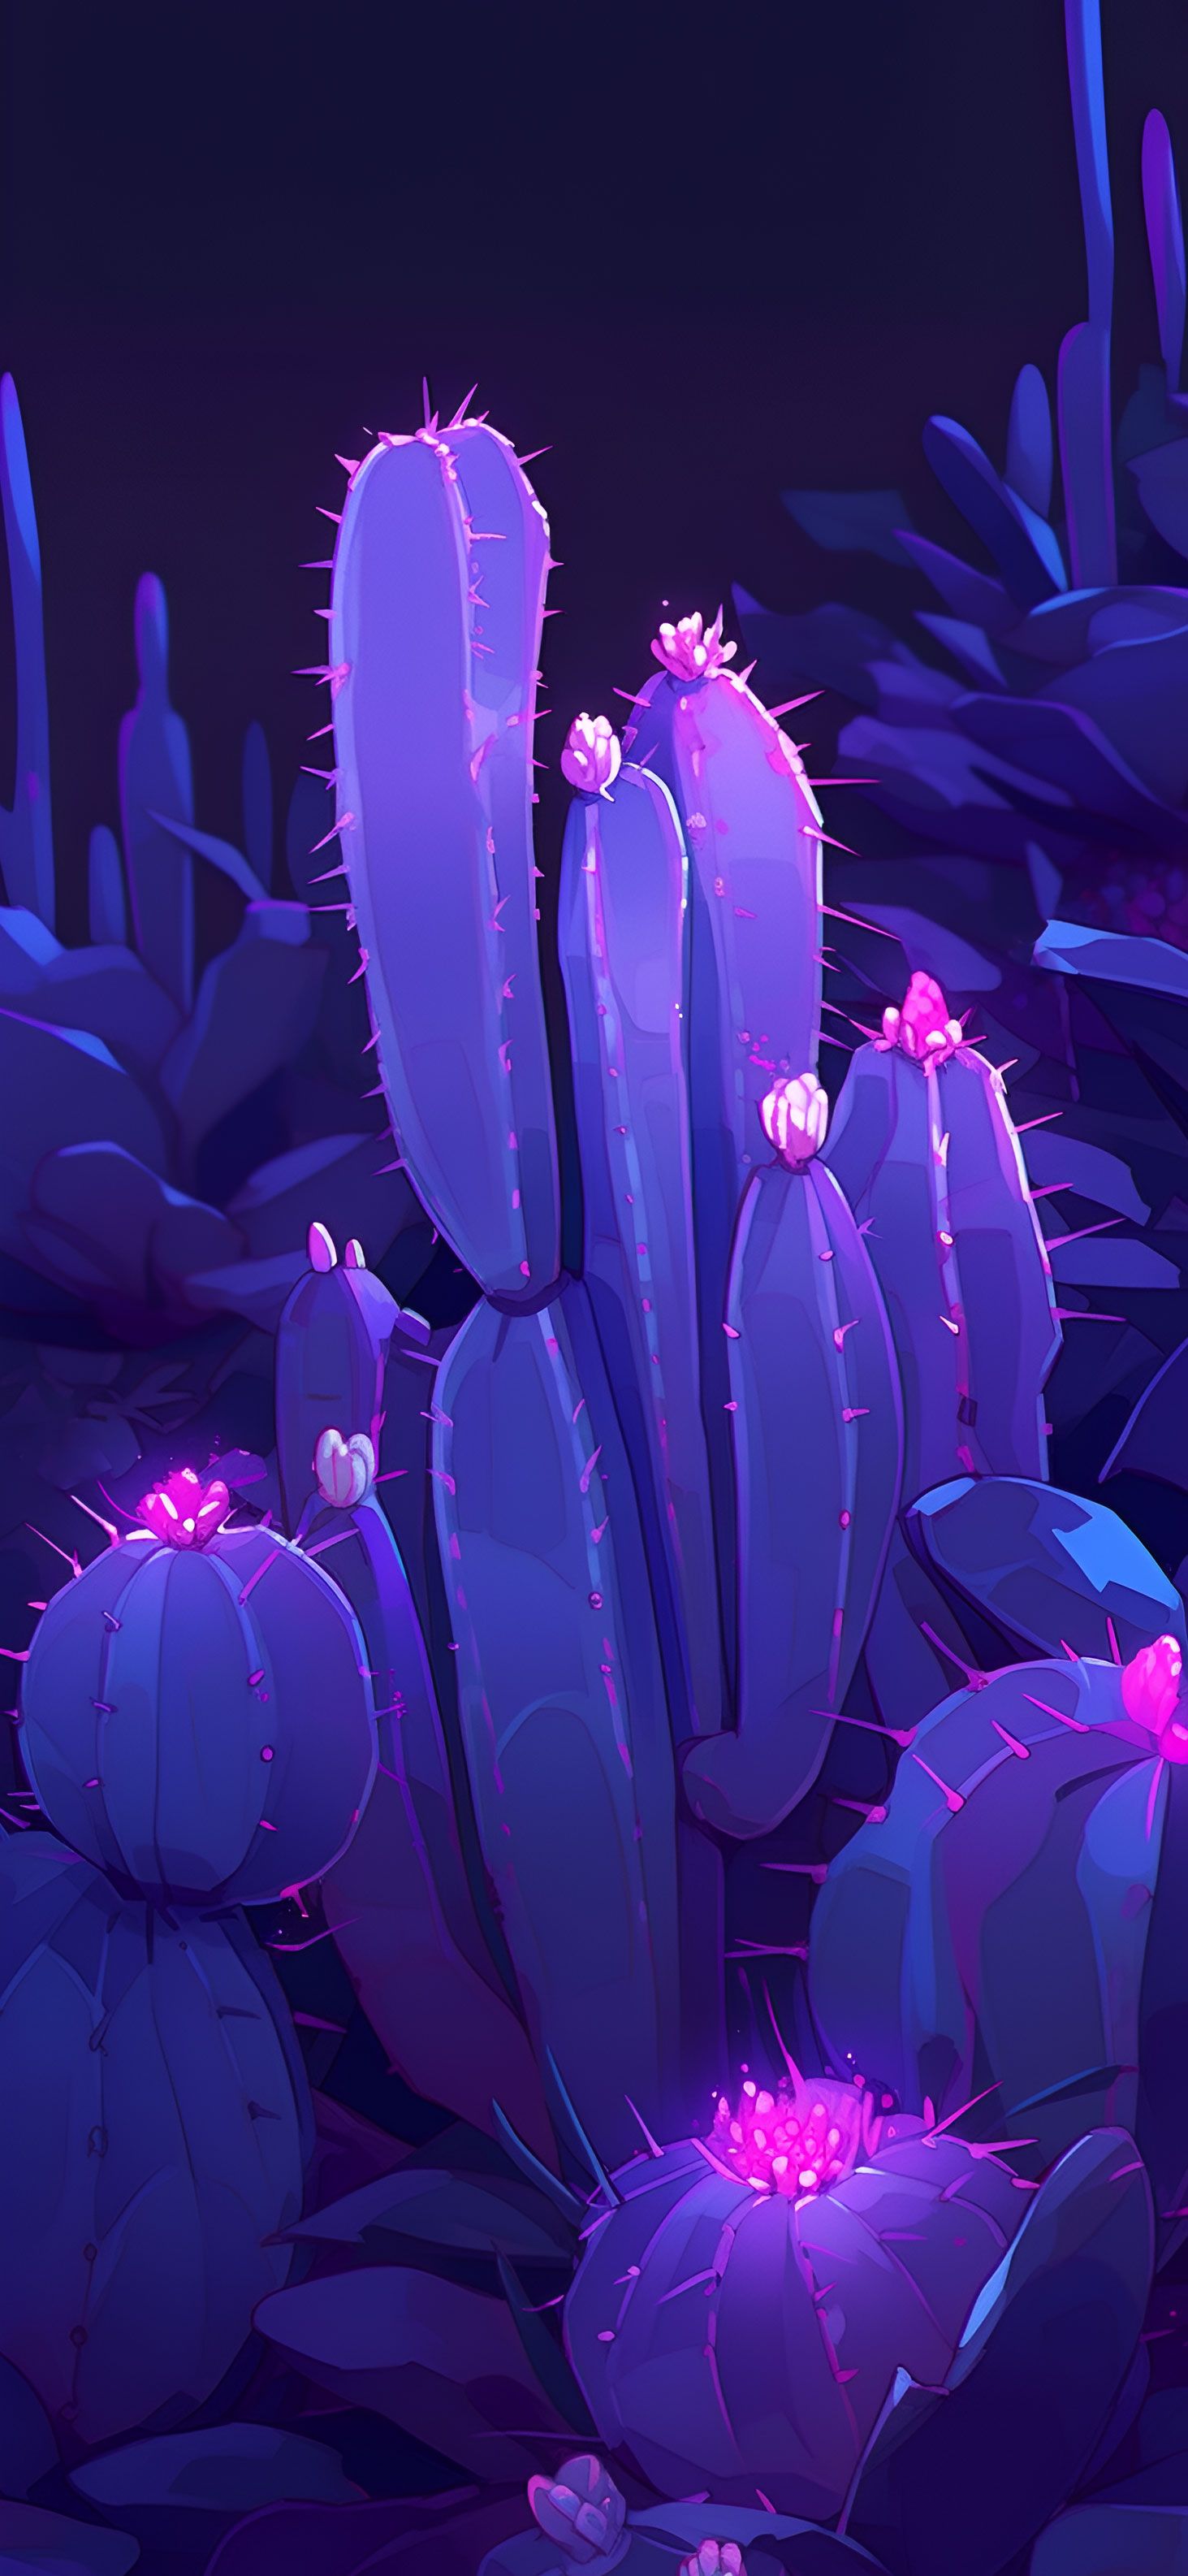  Magenta Hintergrundbild 1463x3171. Vibrant Purple Cacti with Bold Magenta Blooms Wallpaper